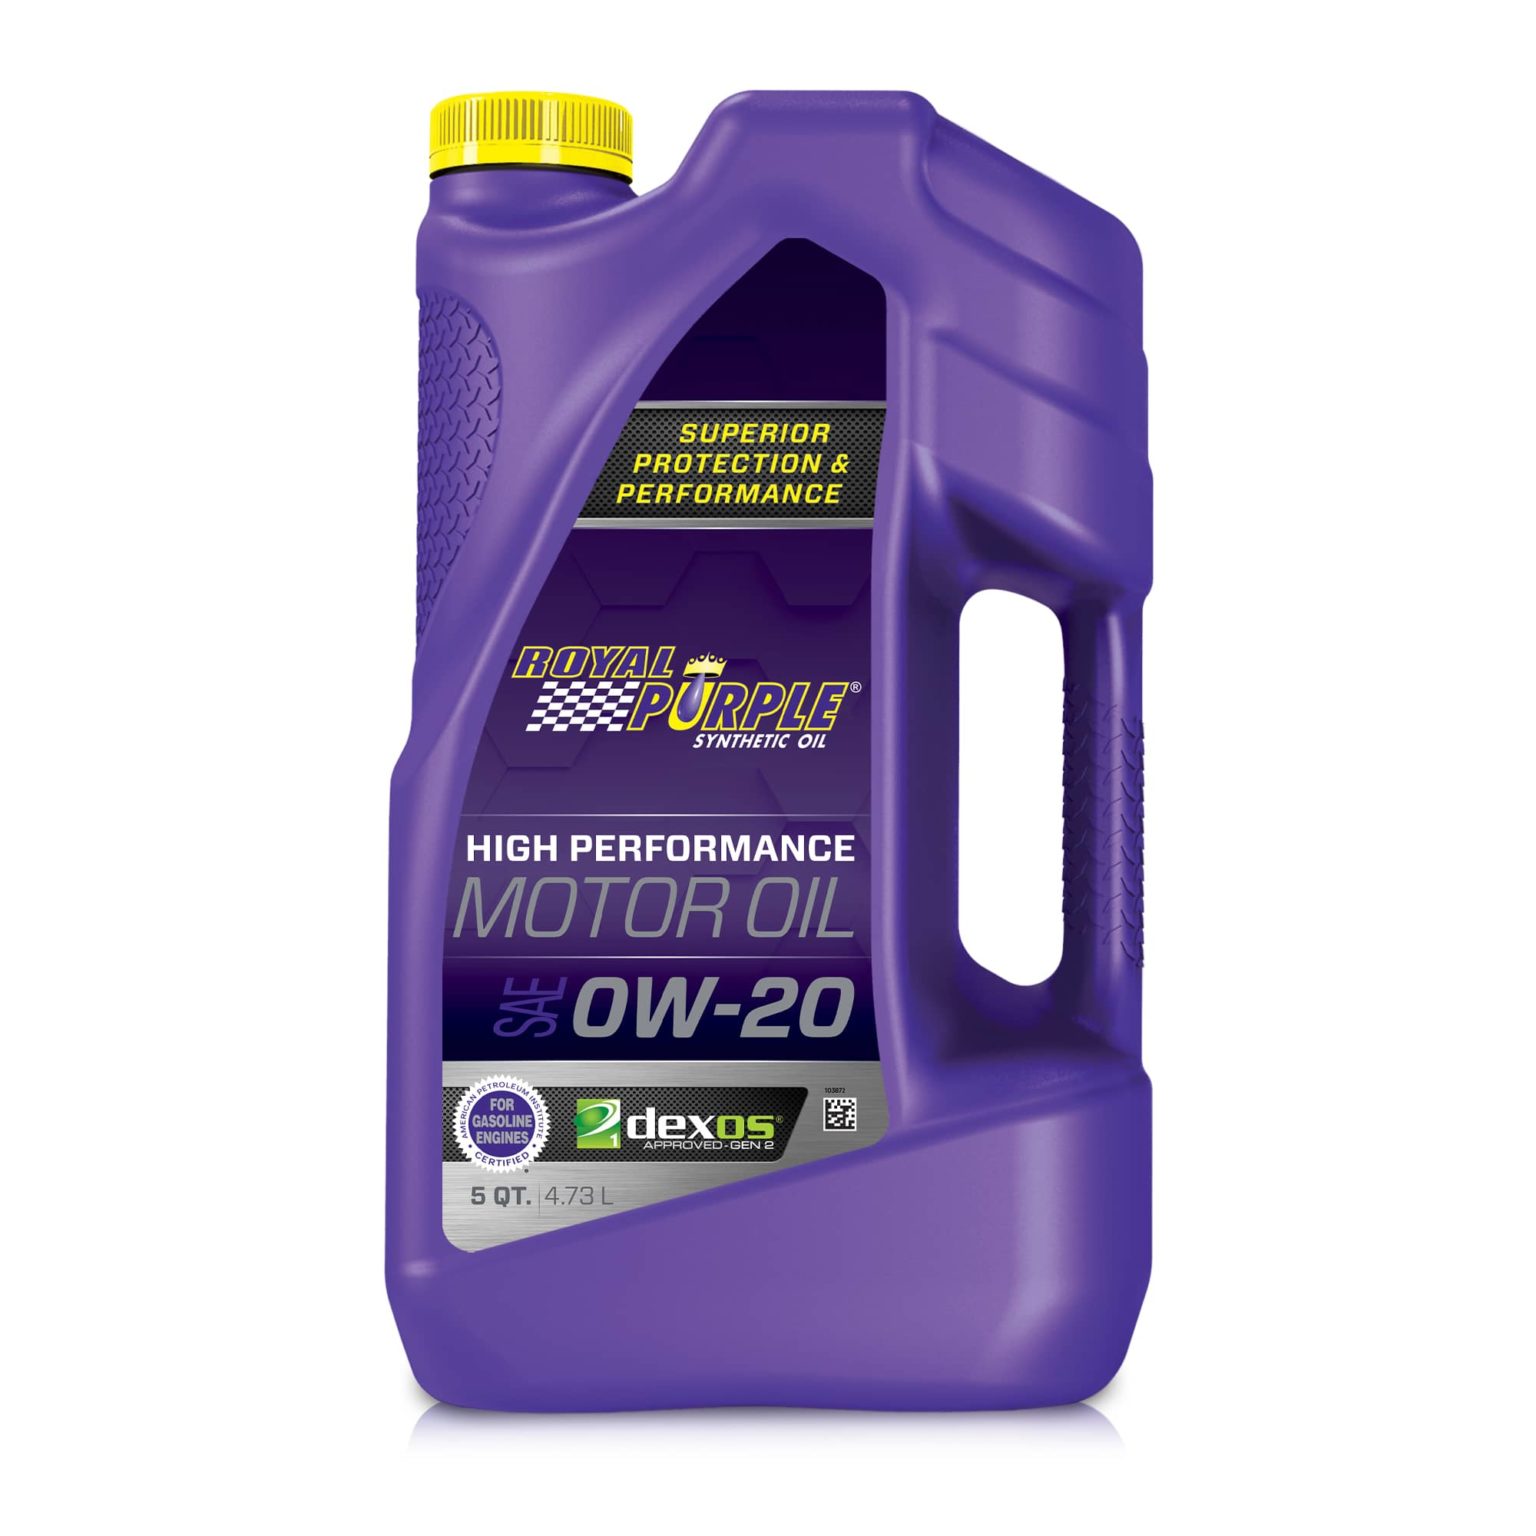 High Performance Motor Oil | Royal Purple